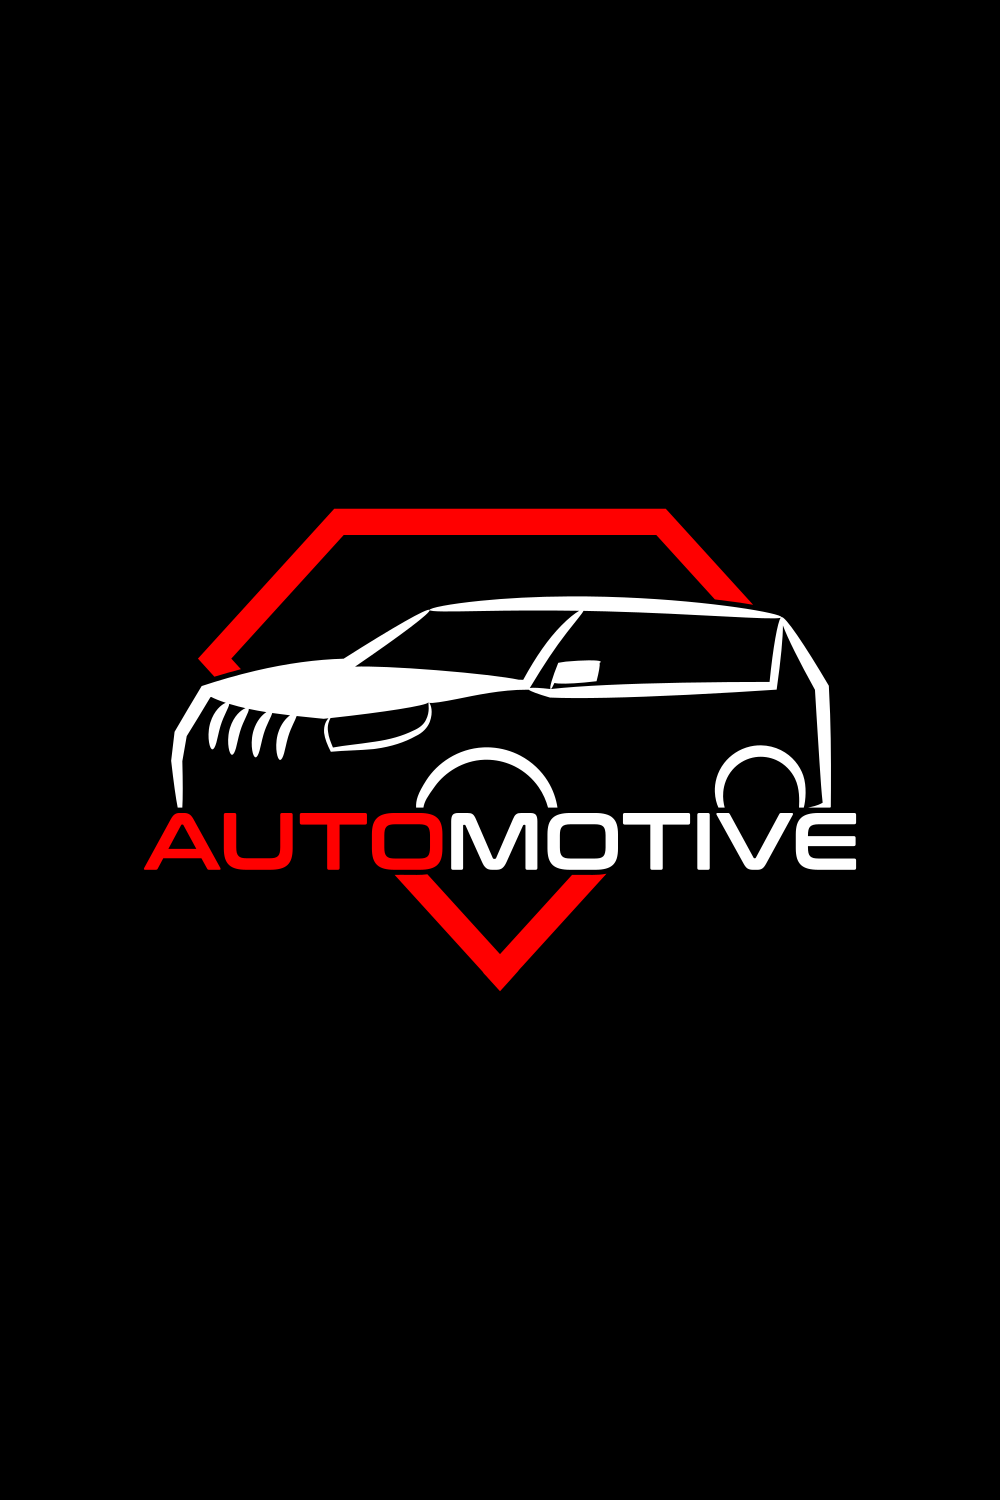 Automotive Creative Style Logo Design pinterest image.